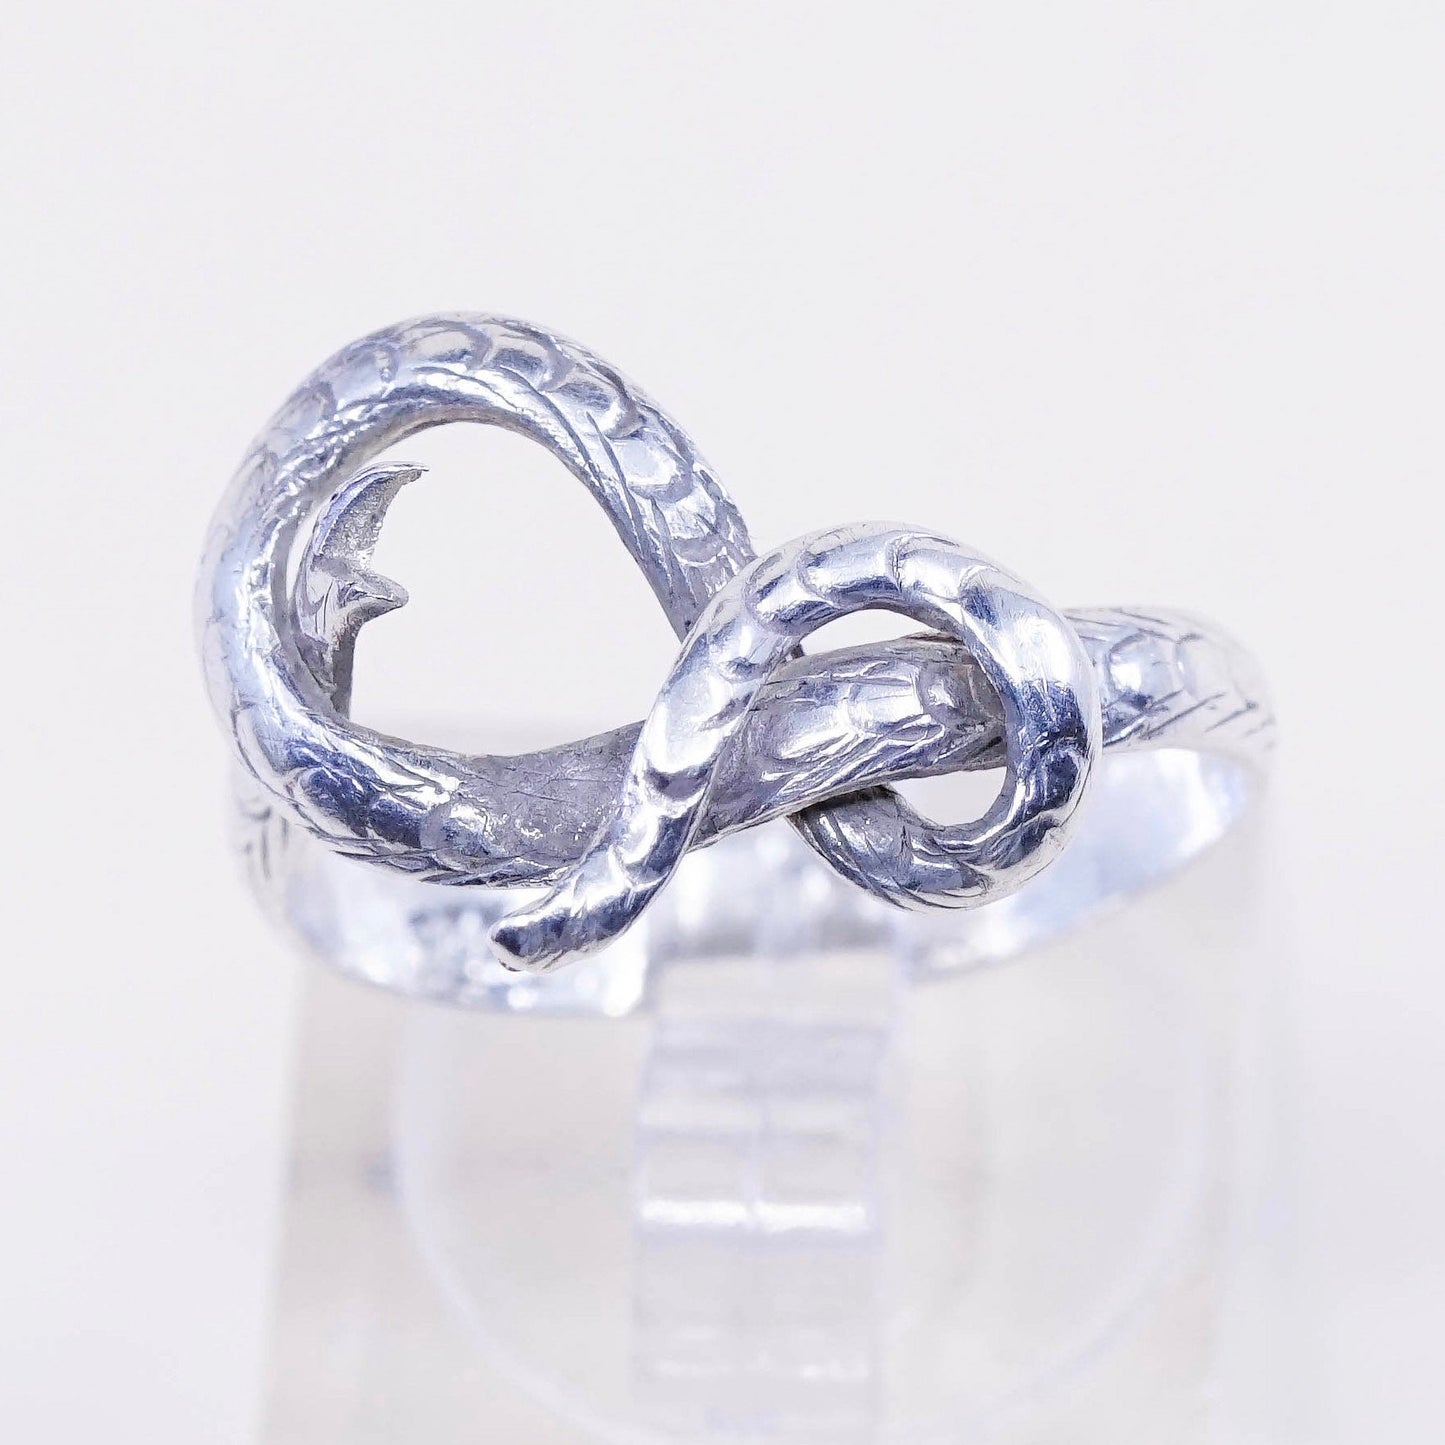 Size 7.75, vintage Sterling silver handmade ring, 925 silver snake band